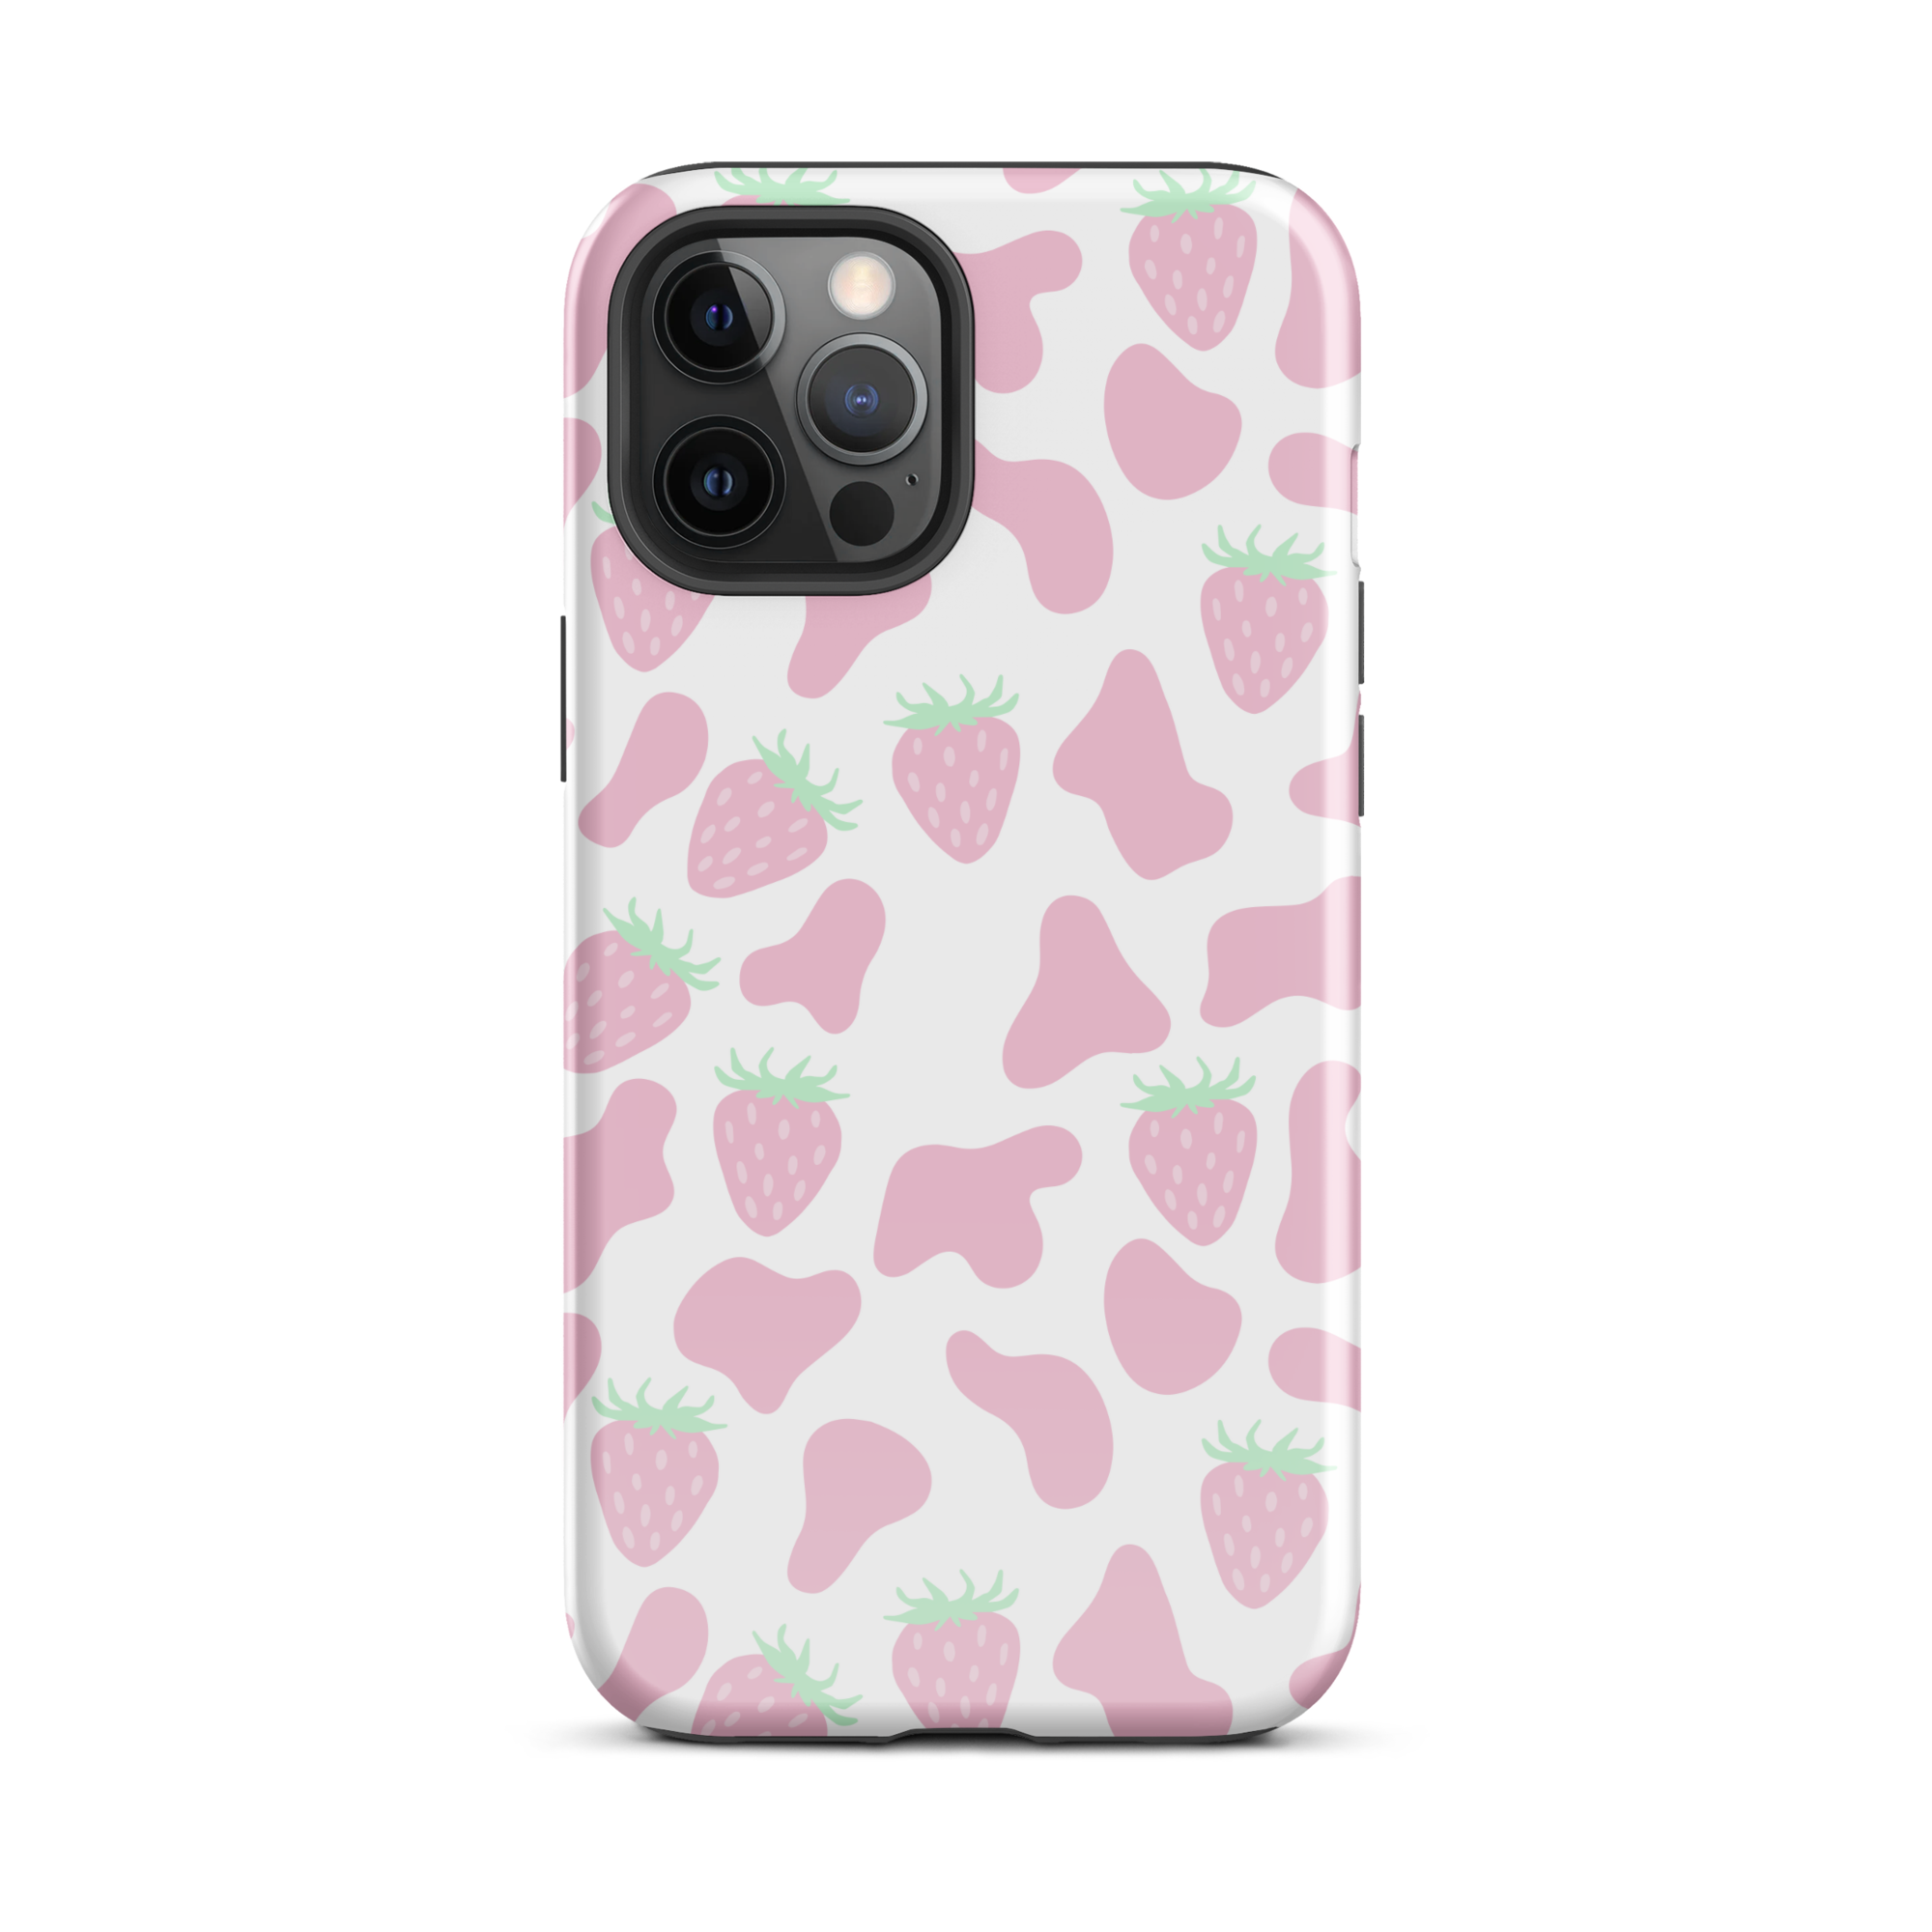 Strawberry Milk iPhone 12 Pro Max Case